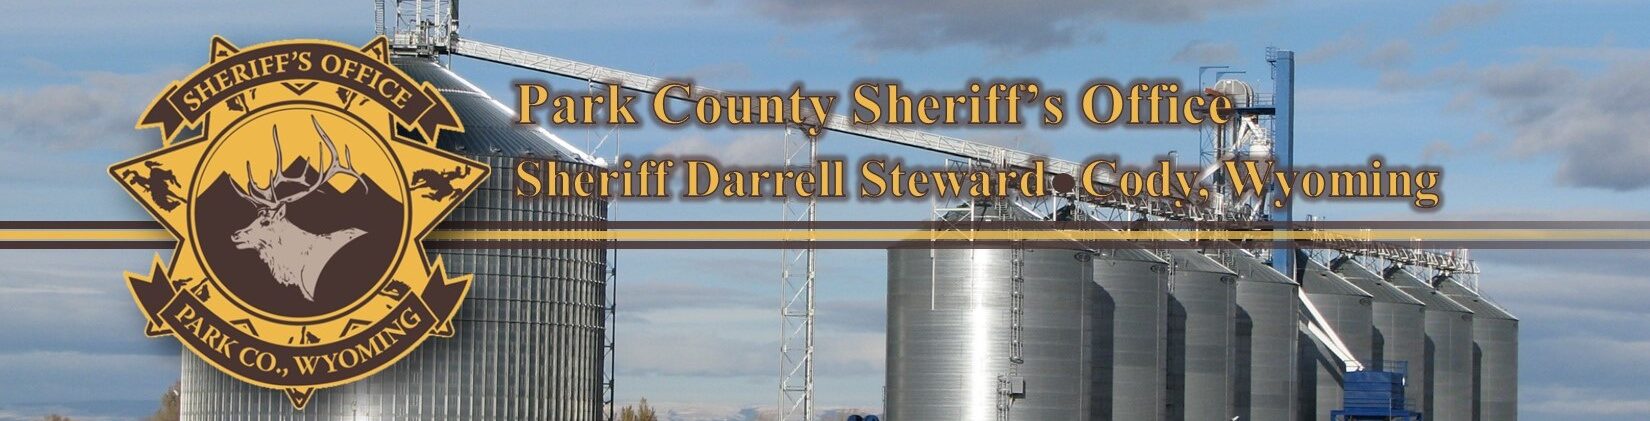 Park County Sheriff